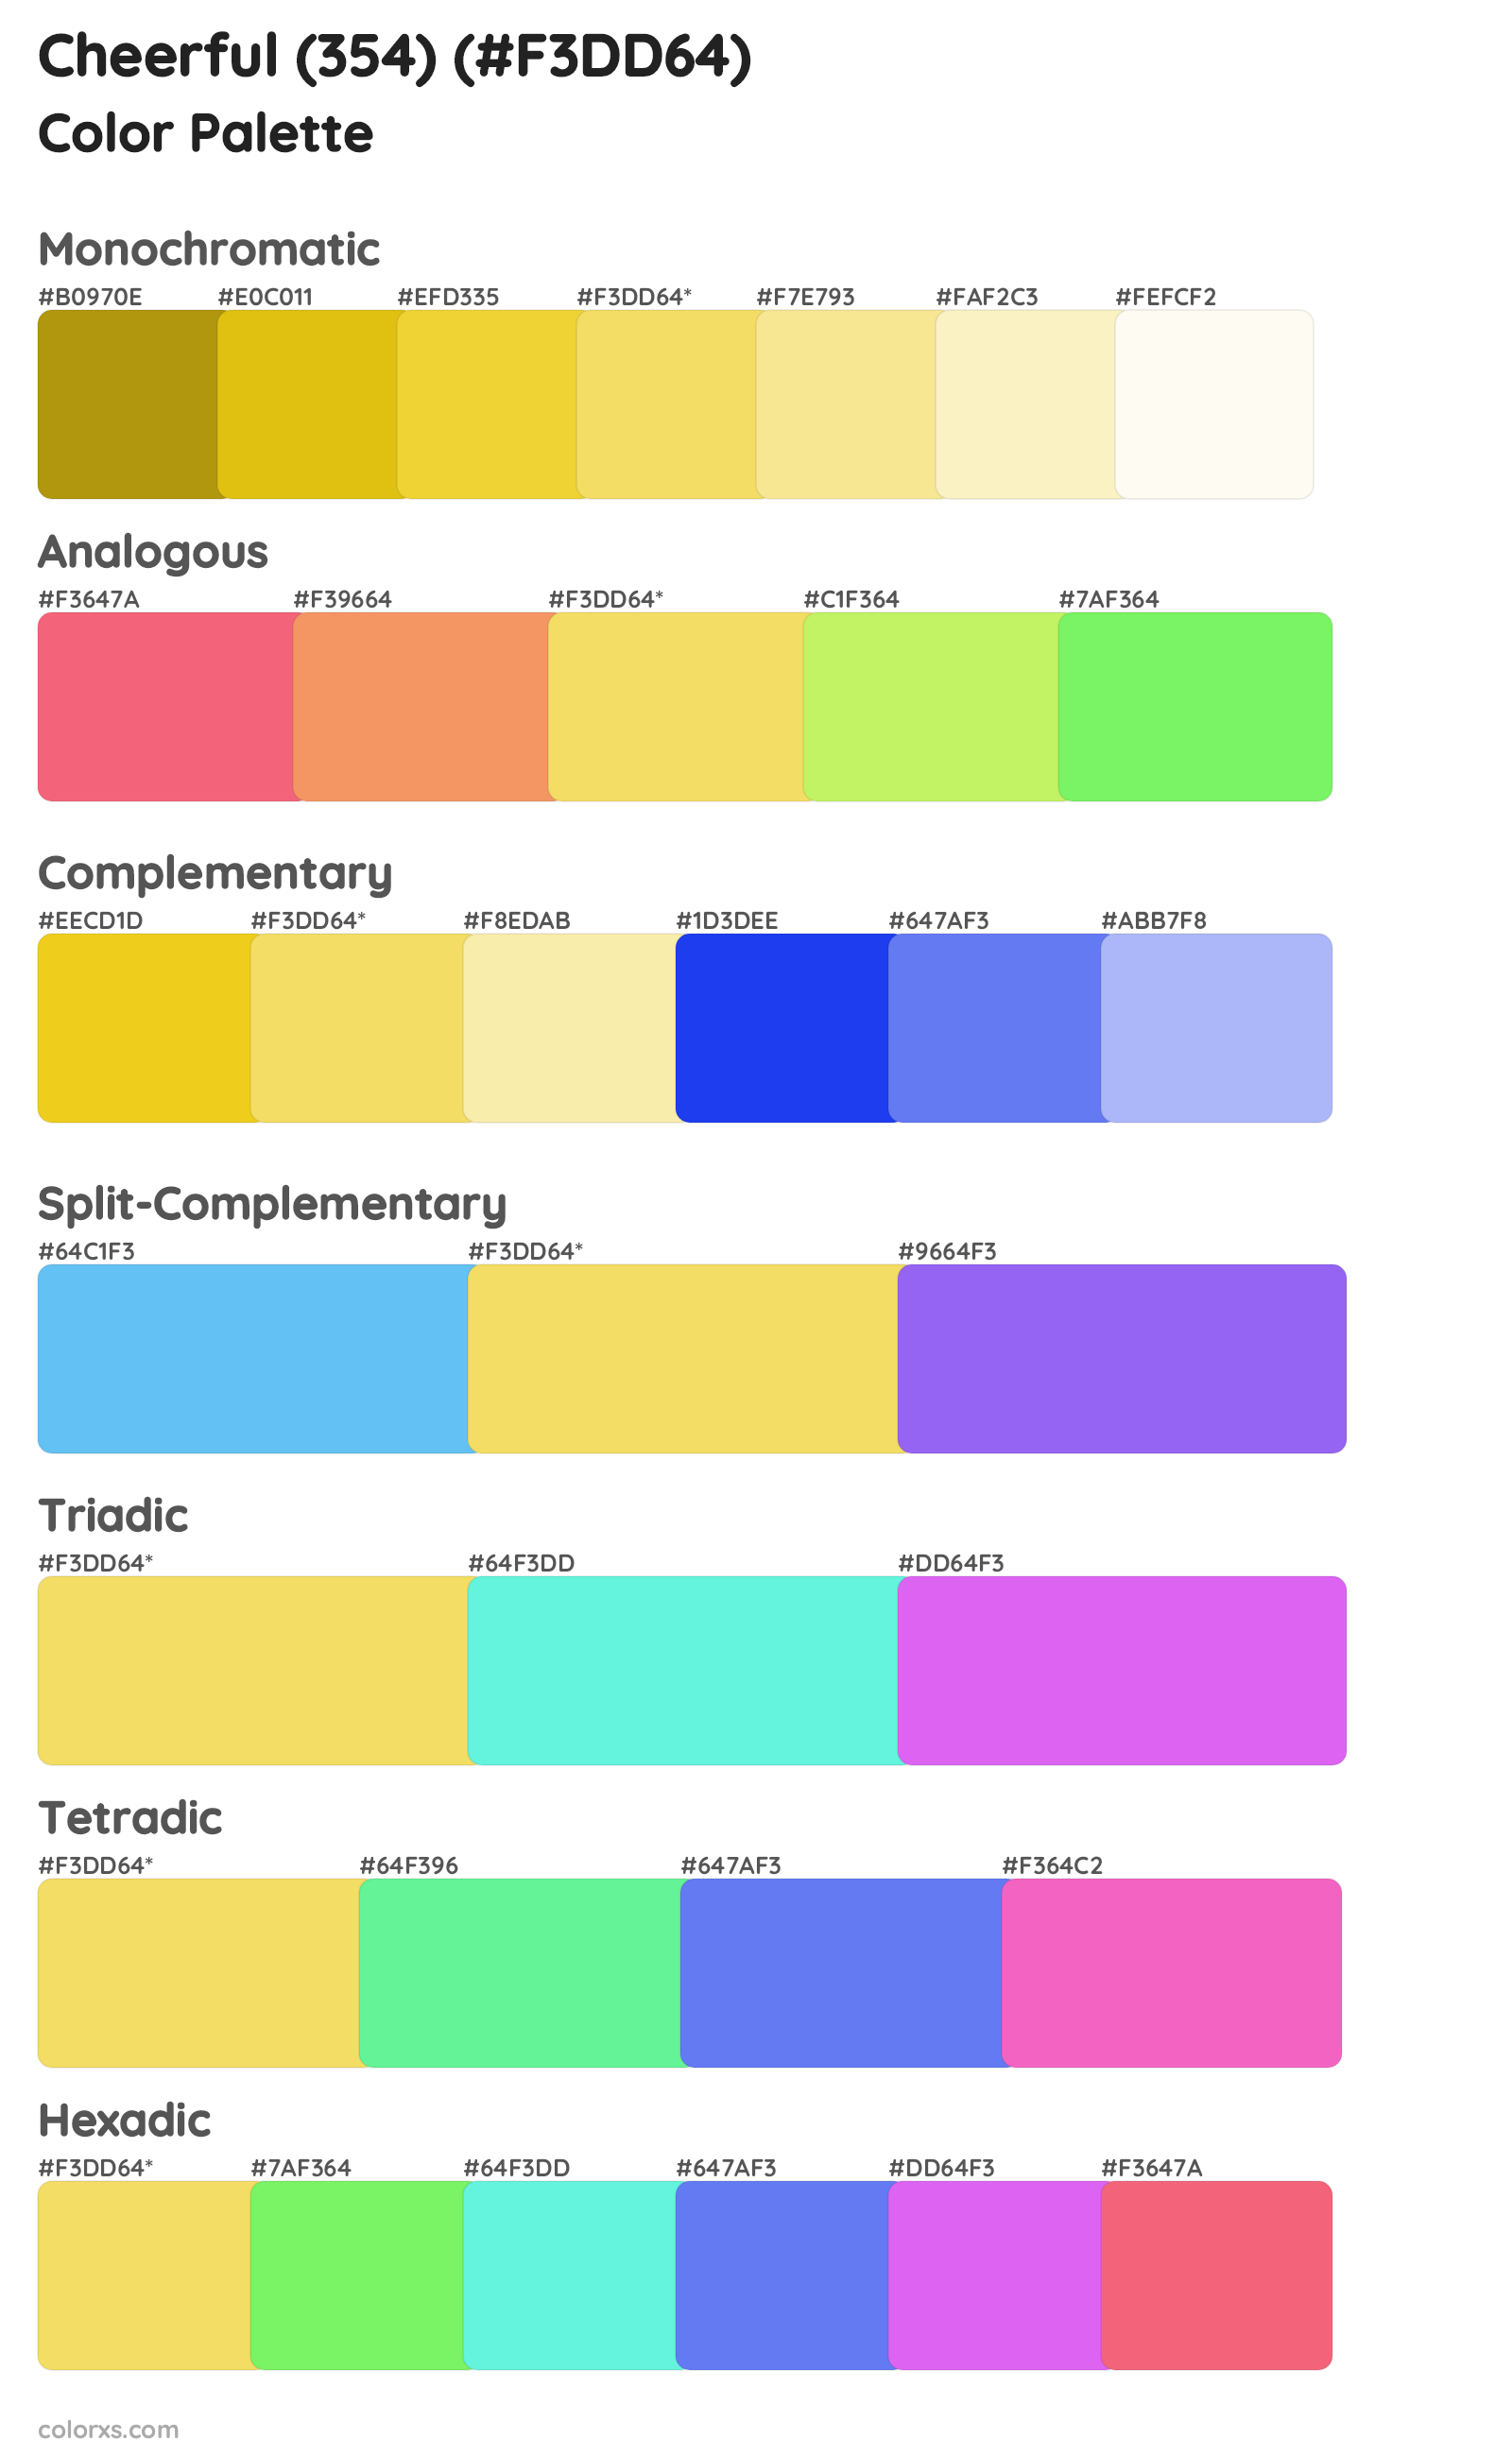 Cheerful (354) Color Scheme Palettes